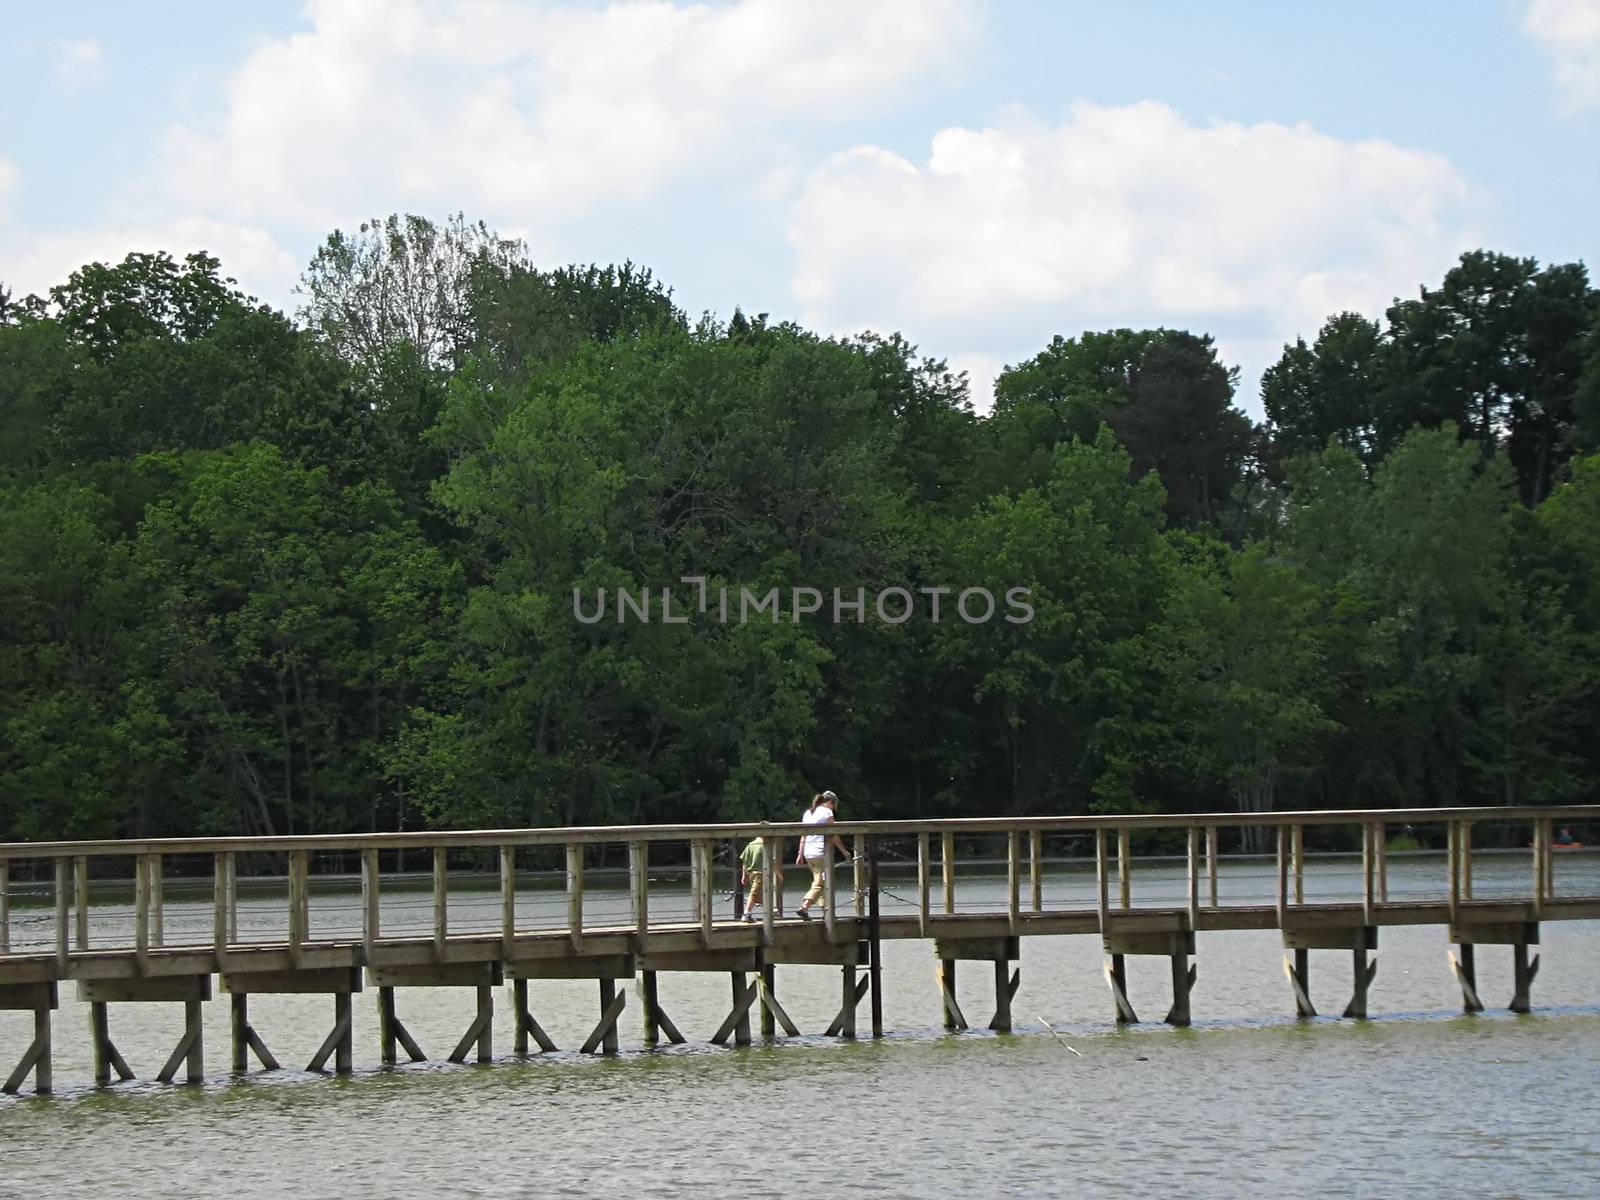 A photograph of a pier near a waterway.